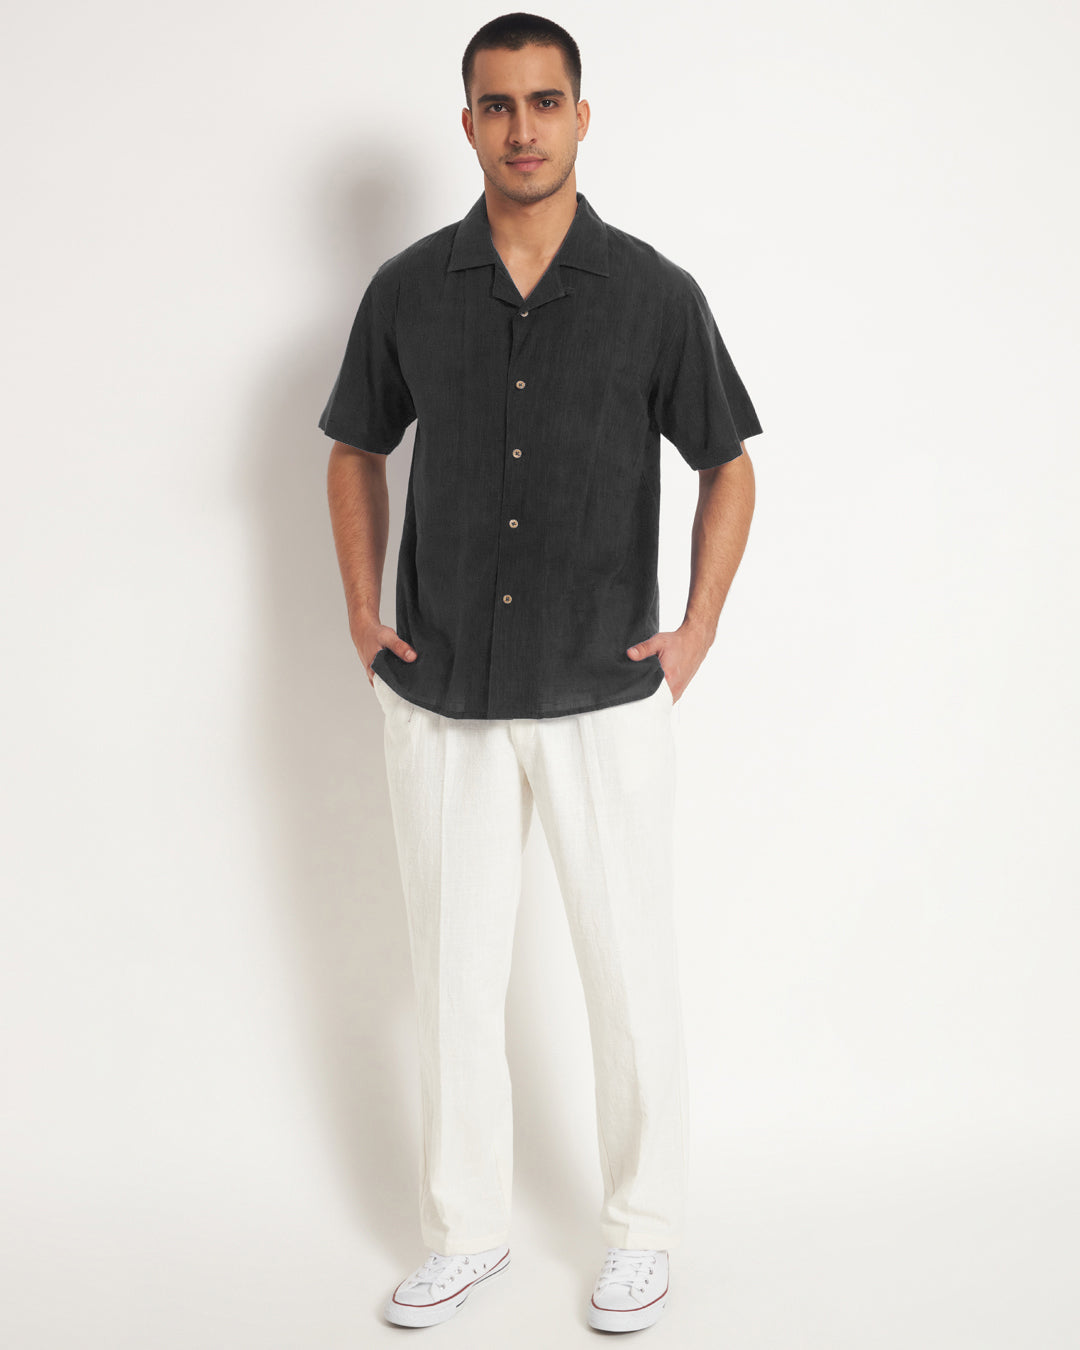 Combo: Classic Black Half Sleeves Men's Shirt & Pants